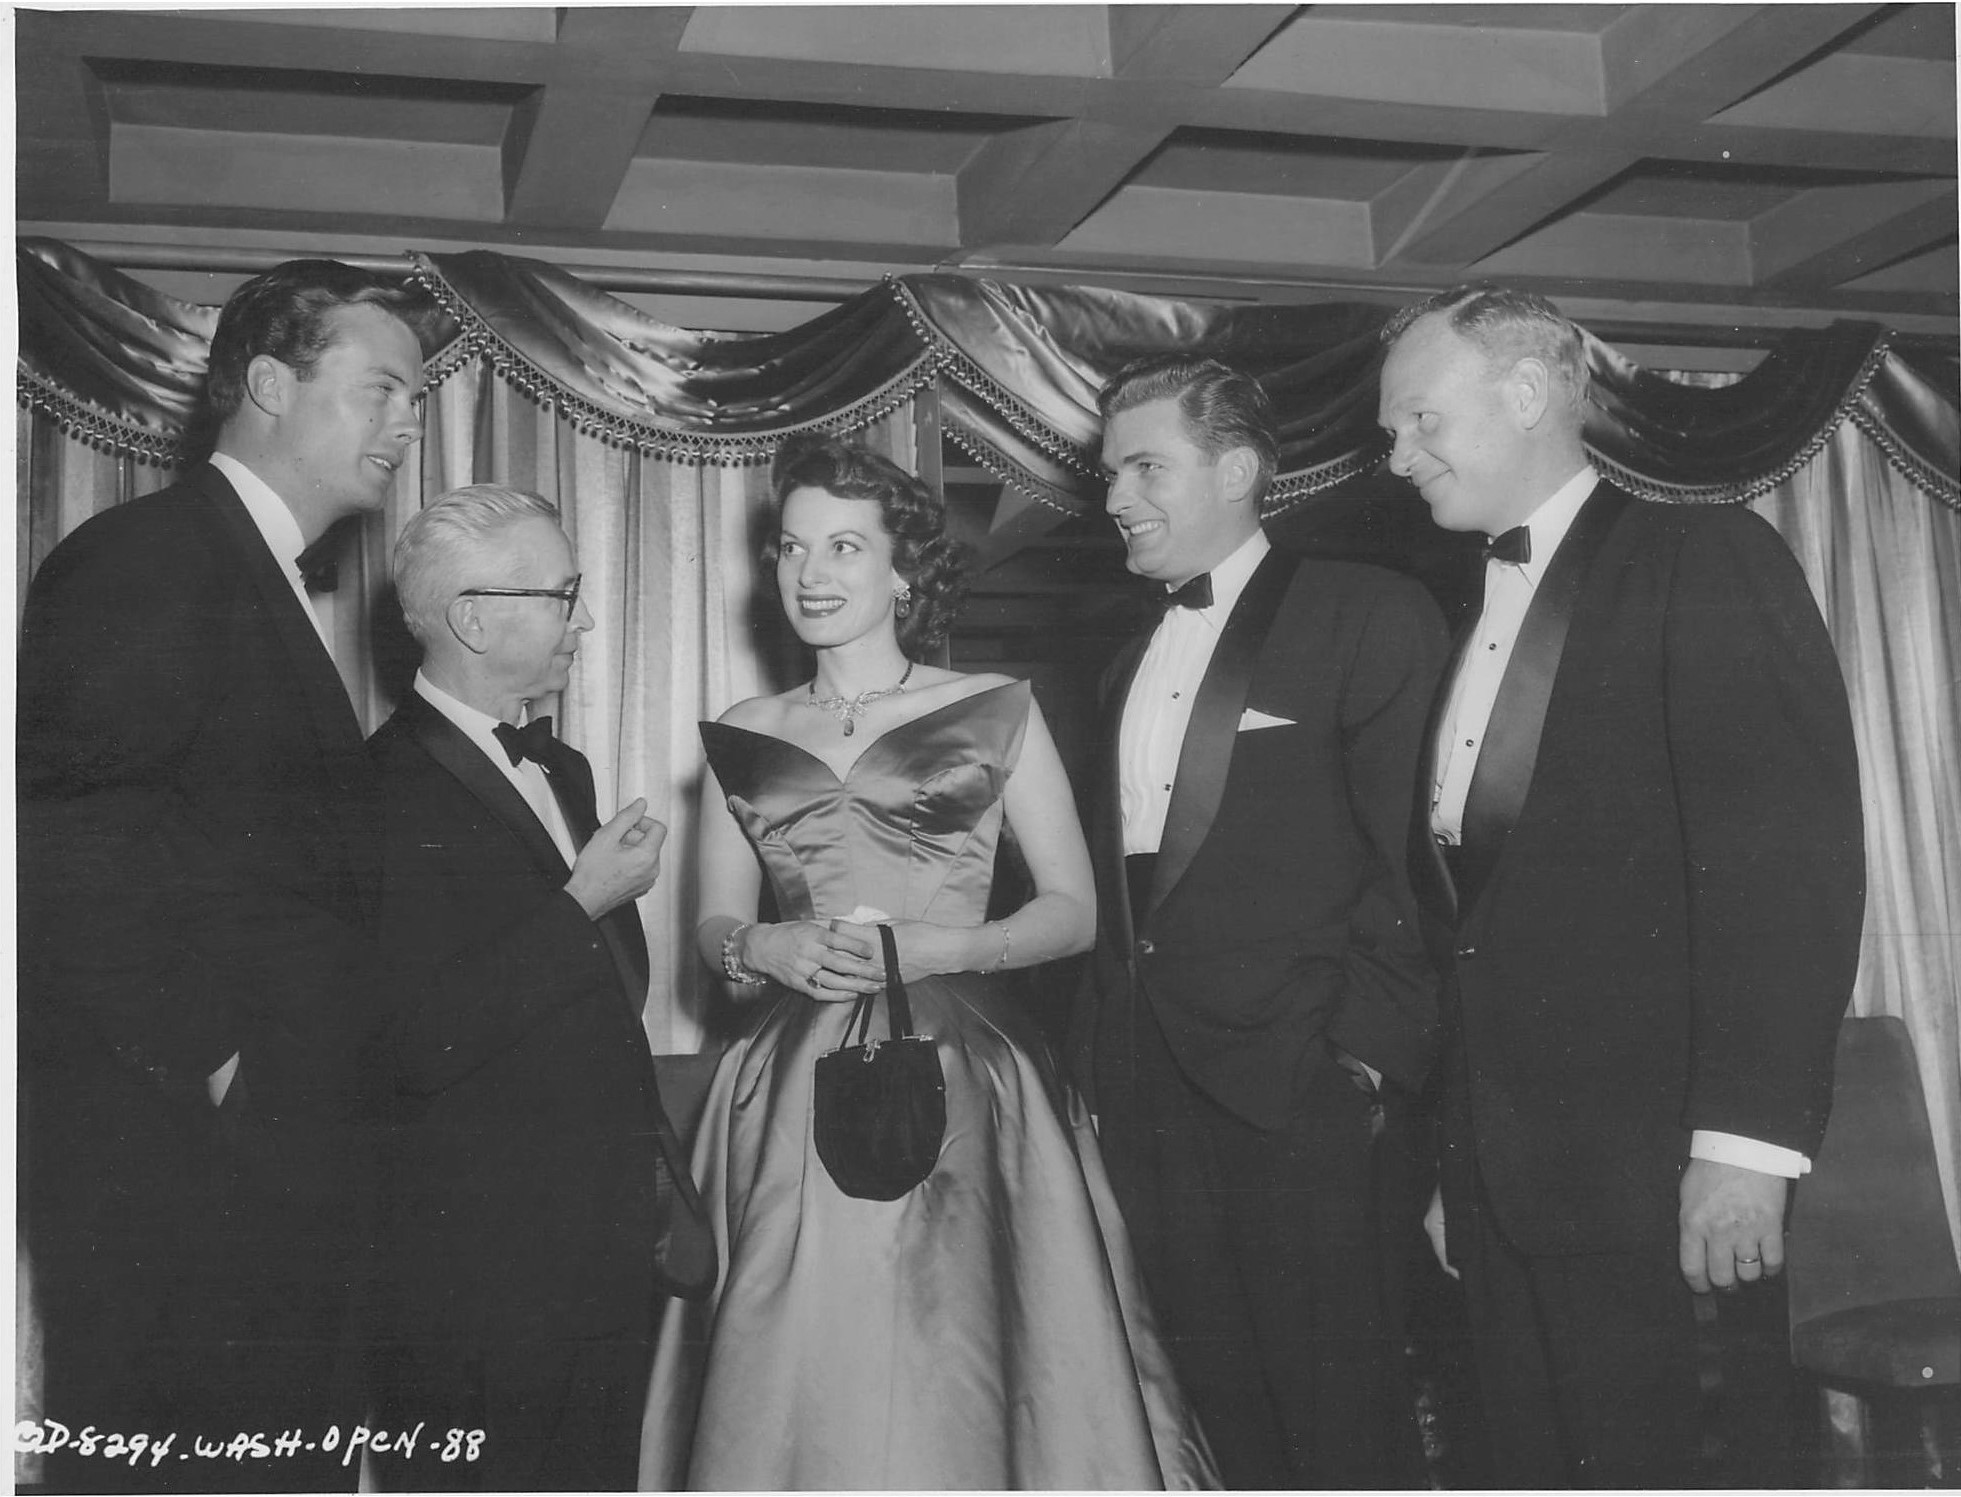  Washington premiere, Feb. 1955. Bob Francis, unidentified man, Maureen O’Hara, Bill Leslie, Harry Carey, Jr. 